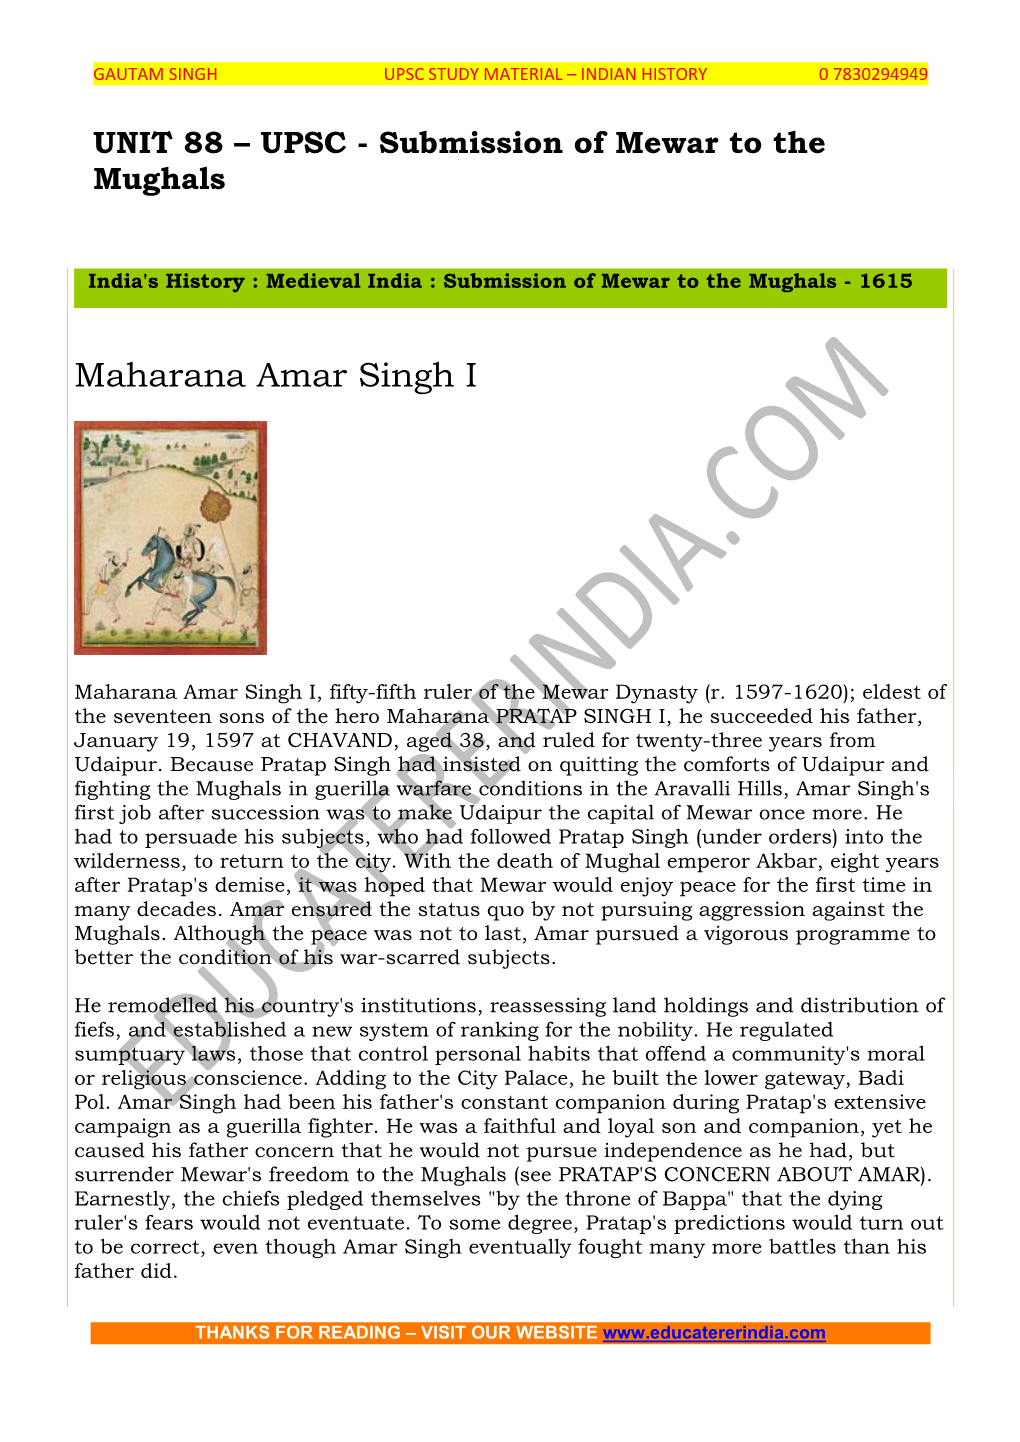 Maharana Amar Singh I